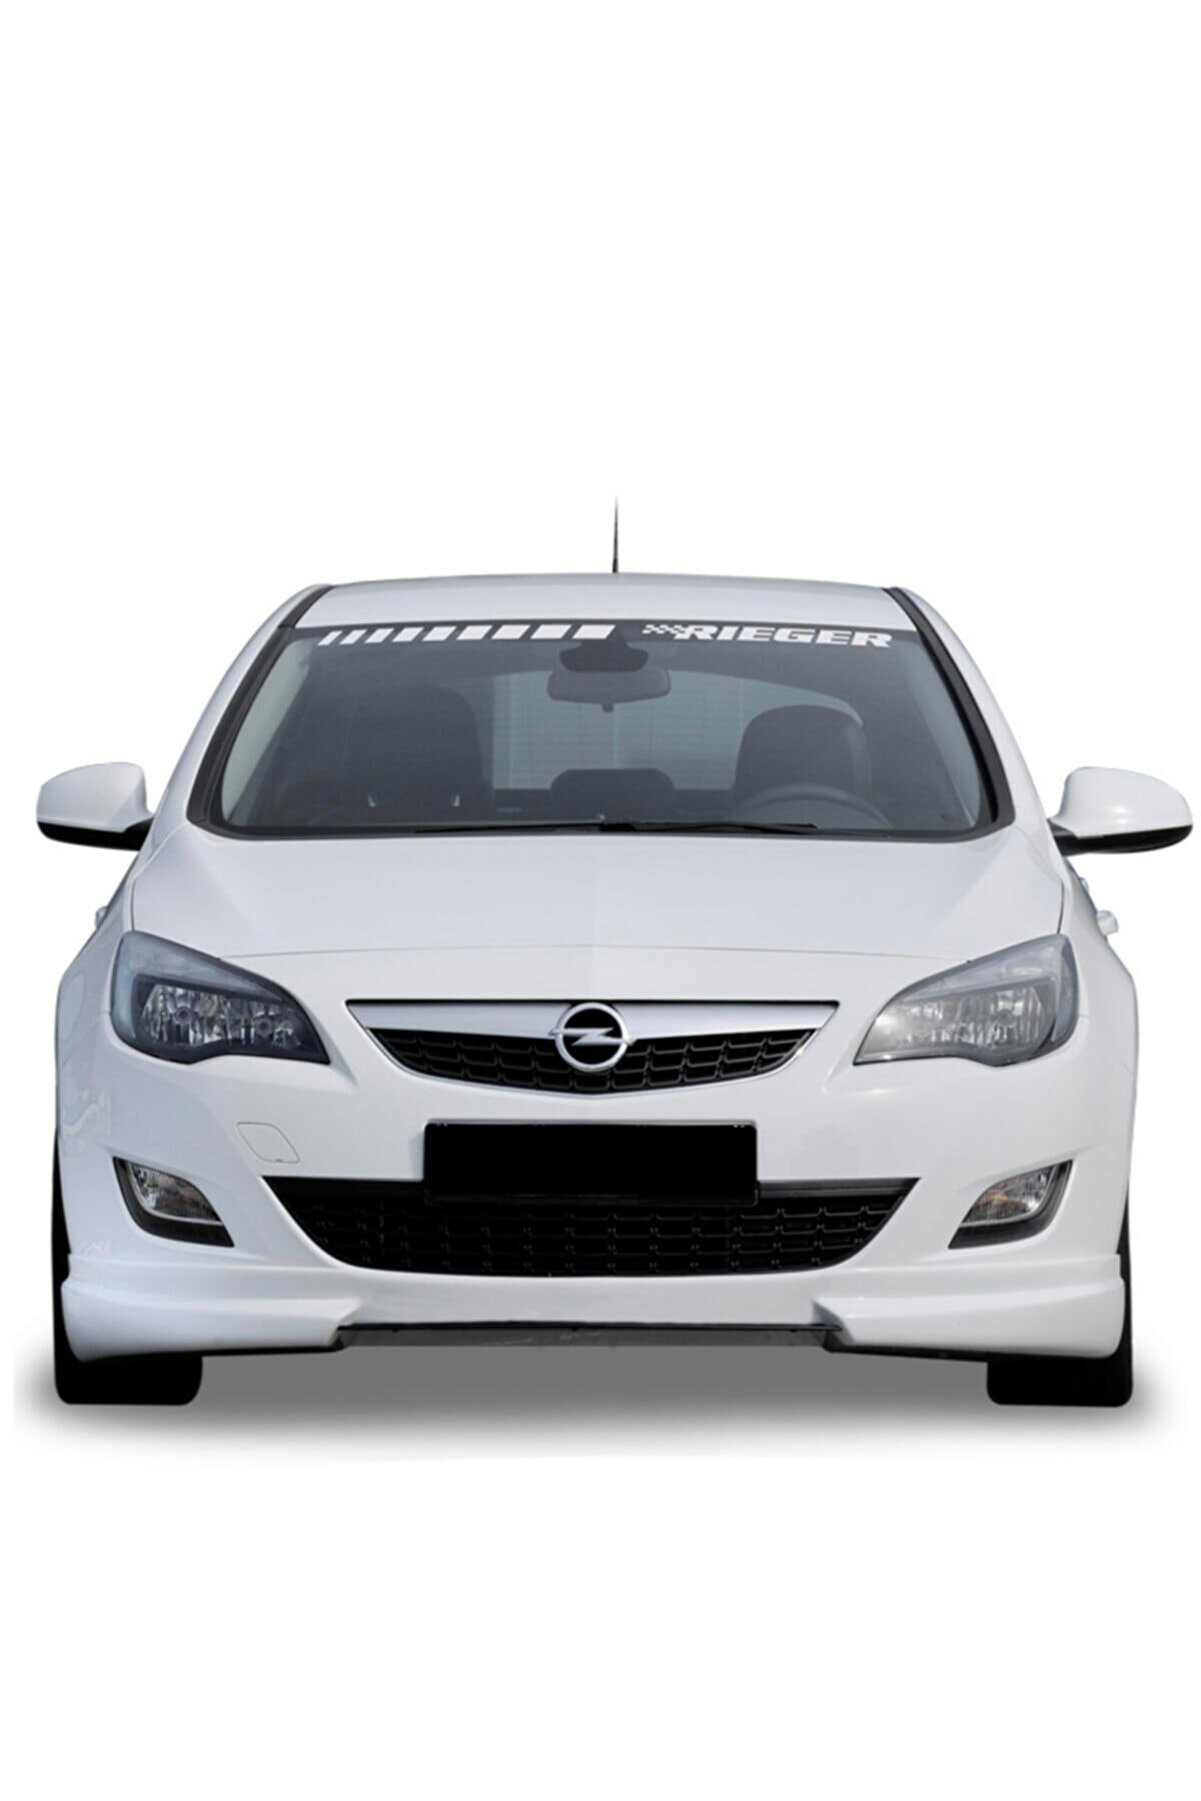 Opel Astra J Hb (2011-2013) Makyajsız Ön Tampon Ek (plastik)_1